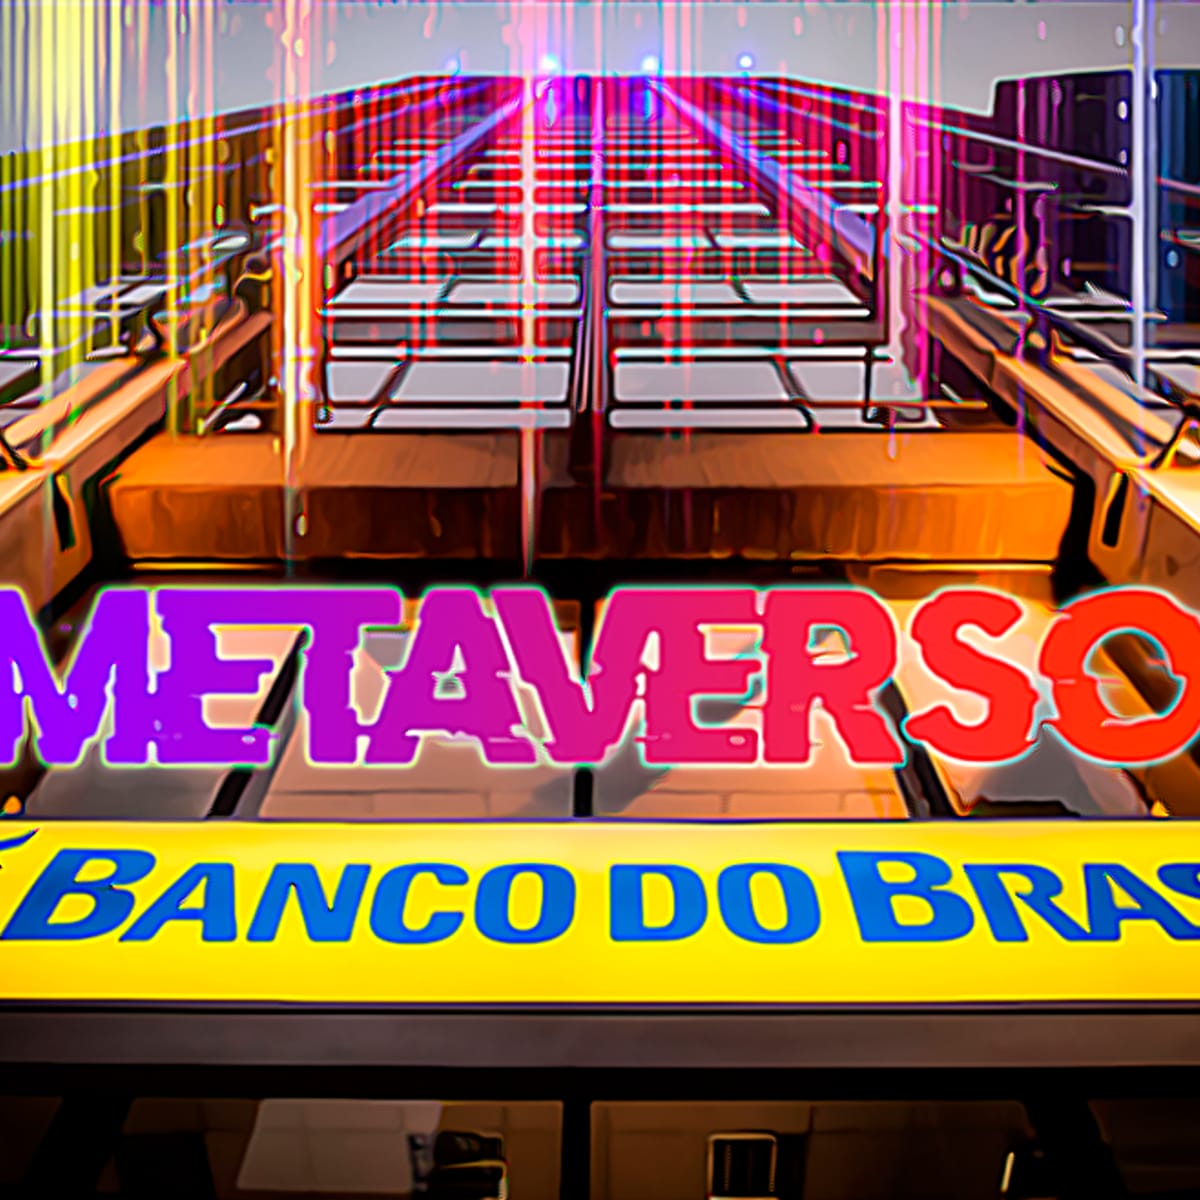 ABC do Metaverso - Blogue RBE